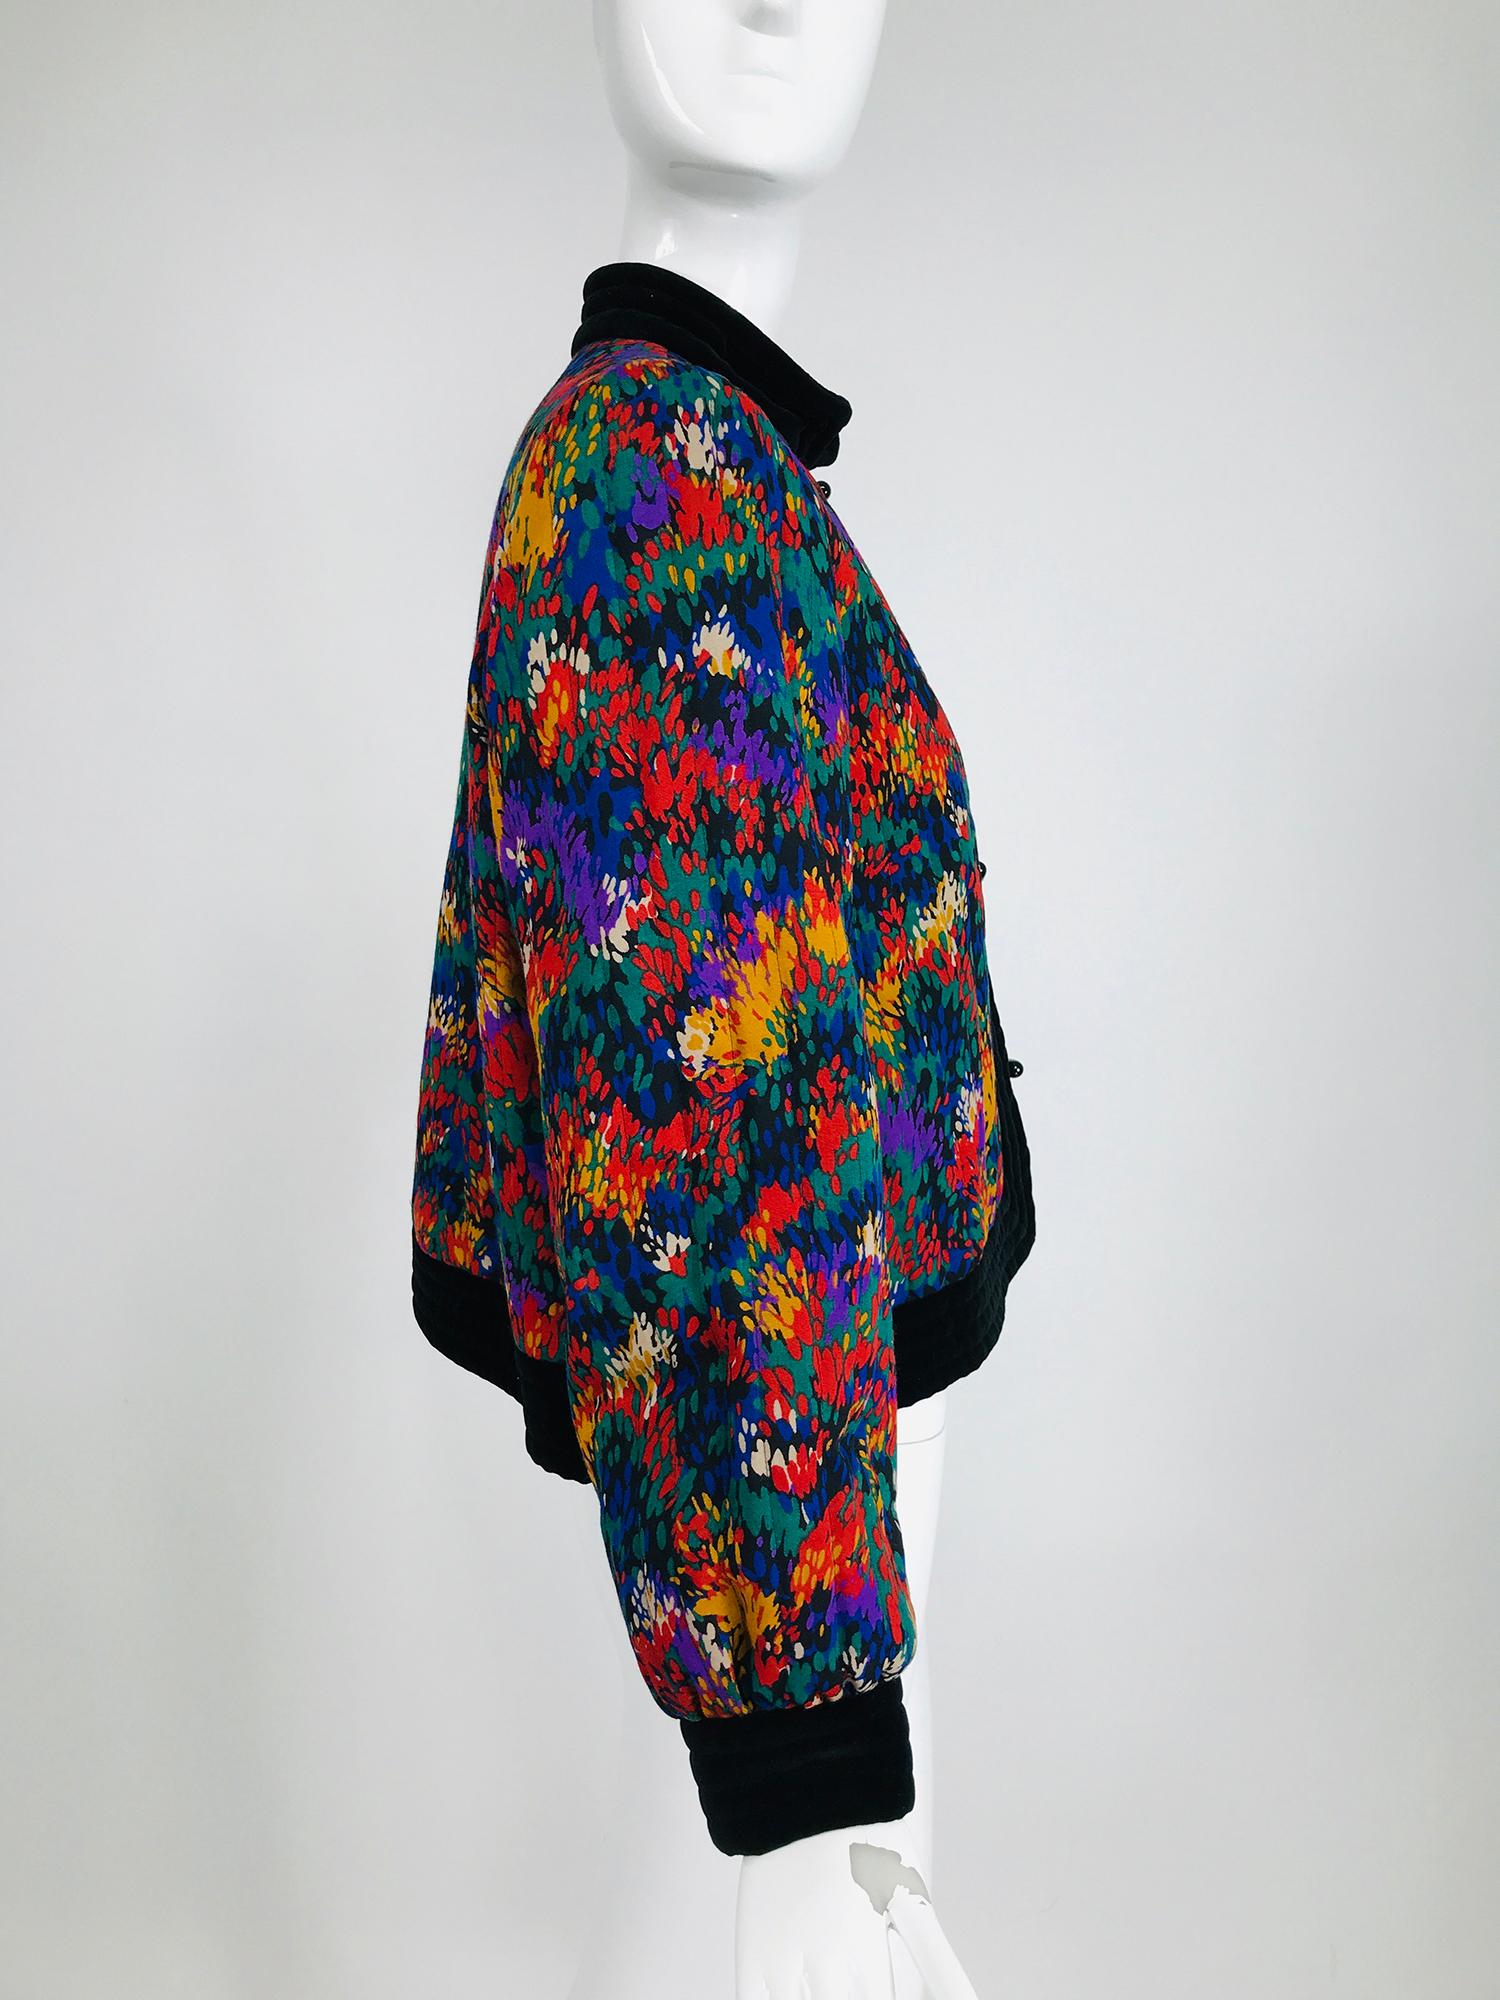 Yves Saint Laurent Quilted Modern Print Challis and Velvet Jacket 1980s For Sale 2